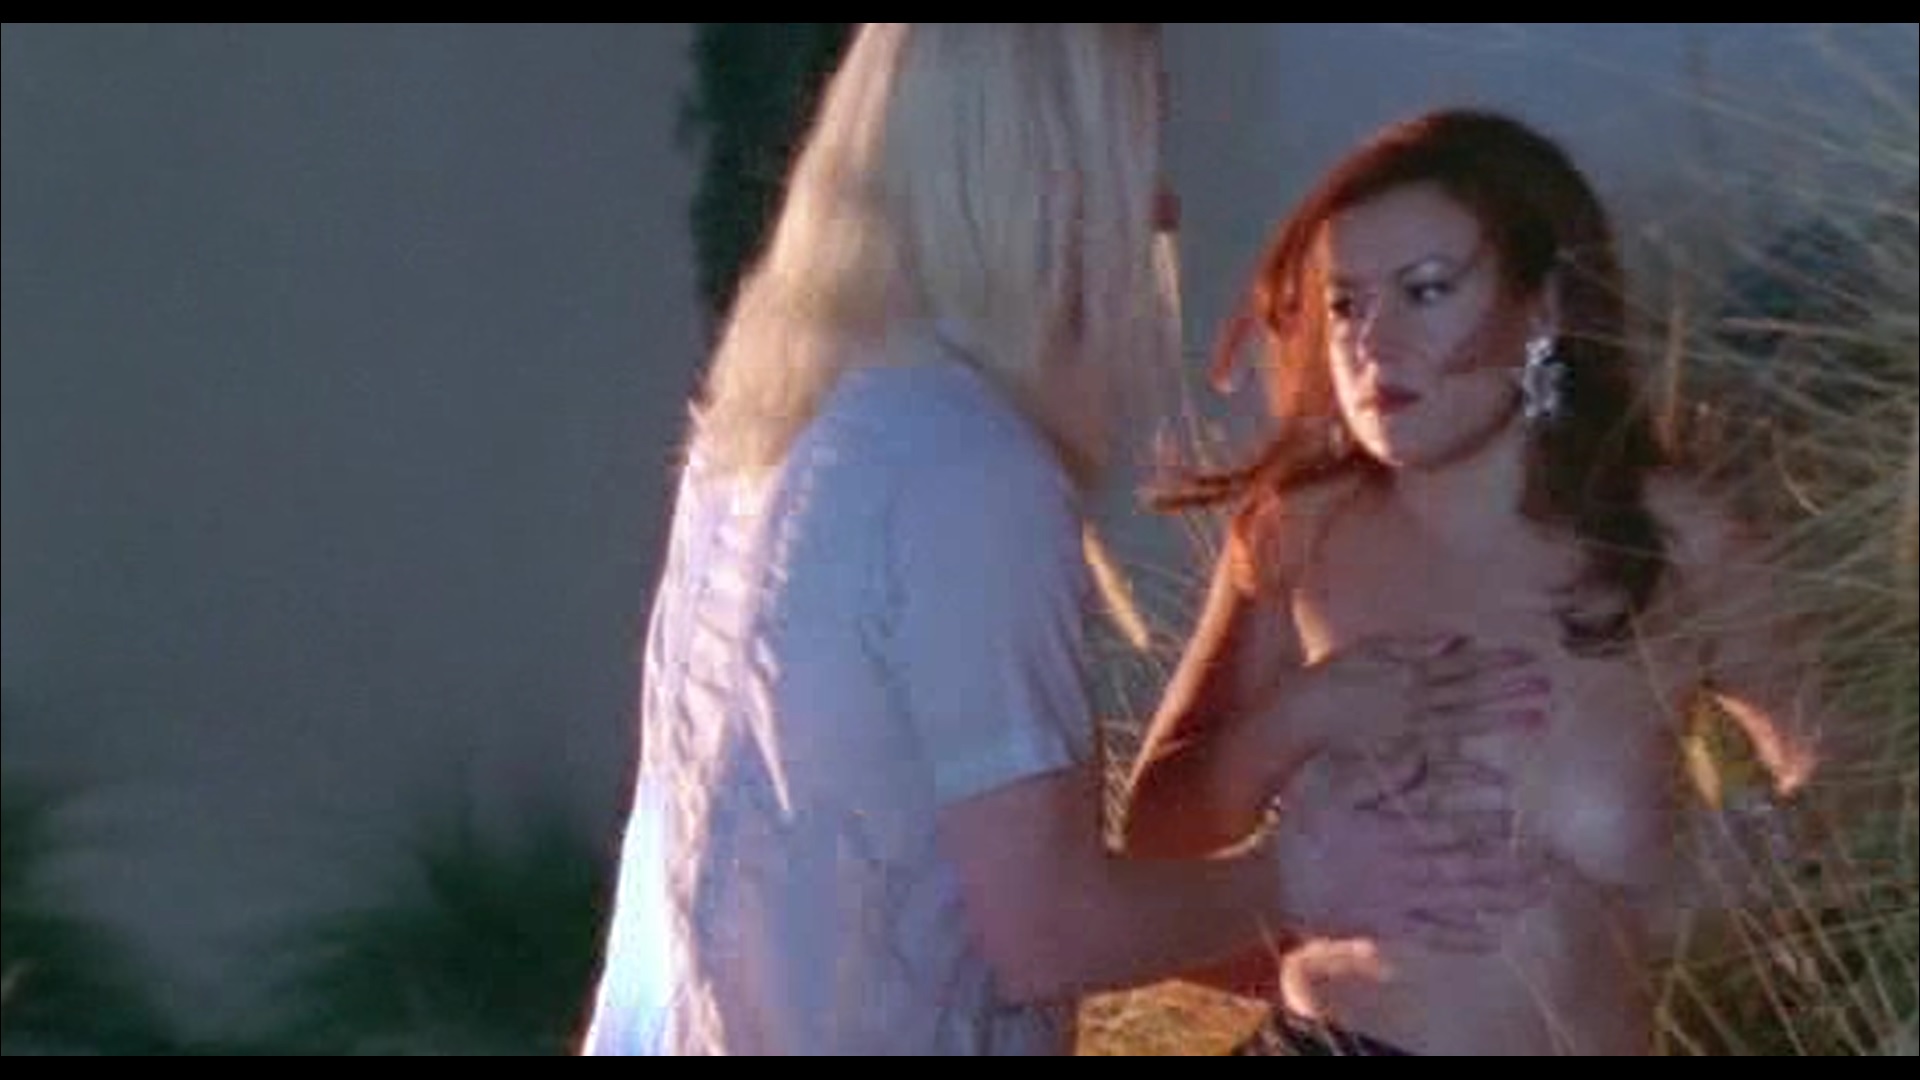 Jennifer Tilly Nude Sex Scene In Fast Sofa Movie - FREE VIDEO